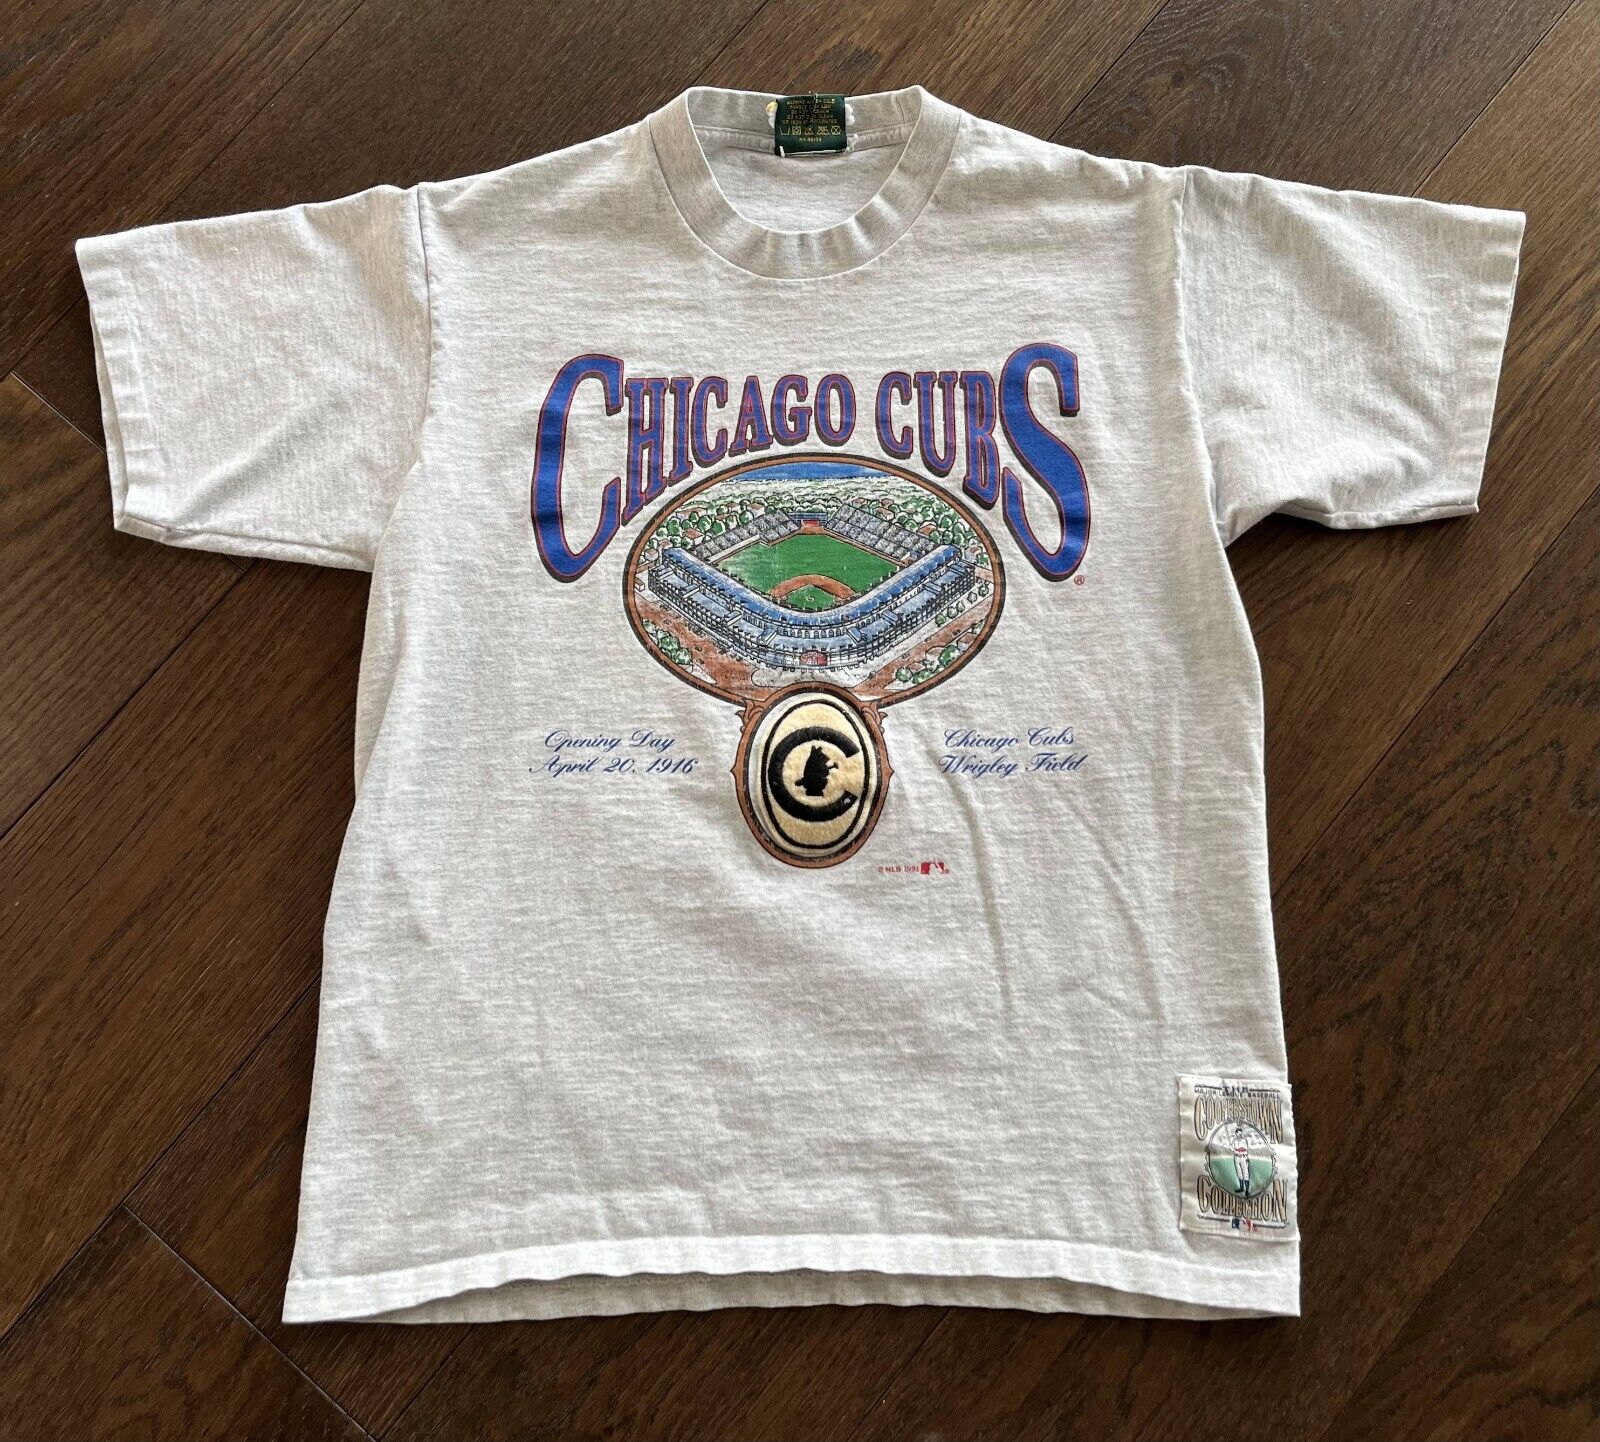 Vintage Chicago Cubs Shirt for Sale in Orange, CA - OfferUp